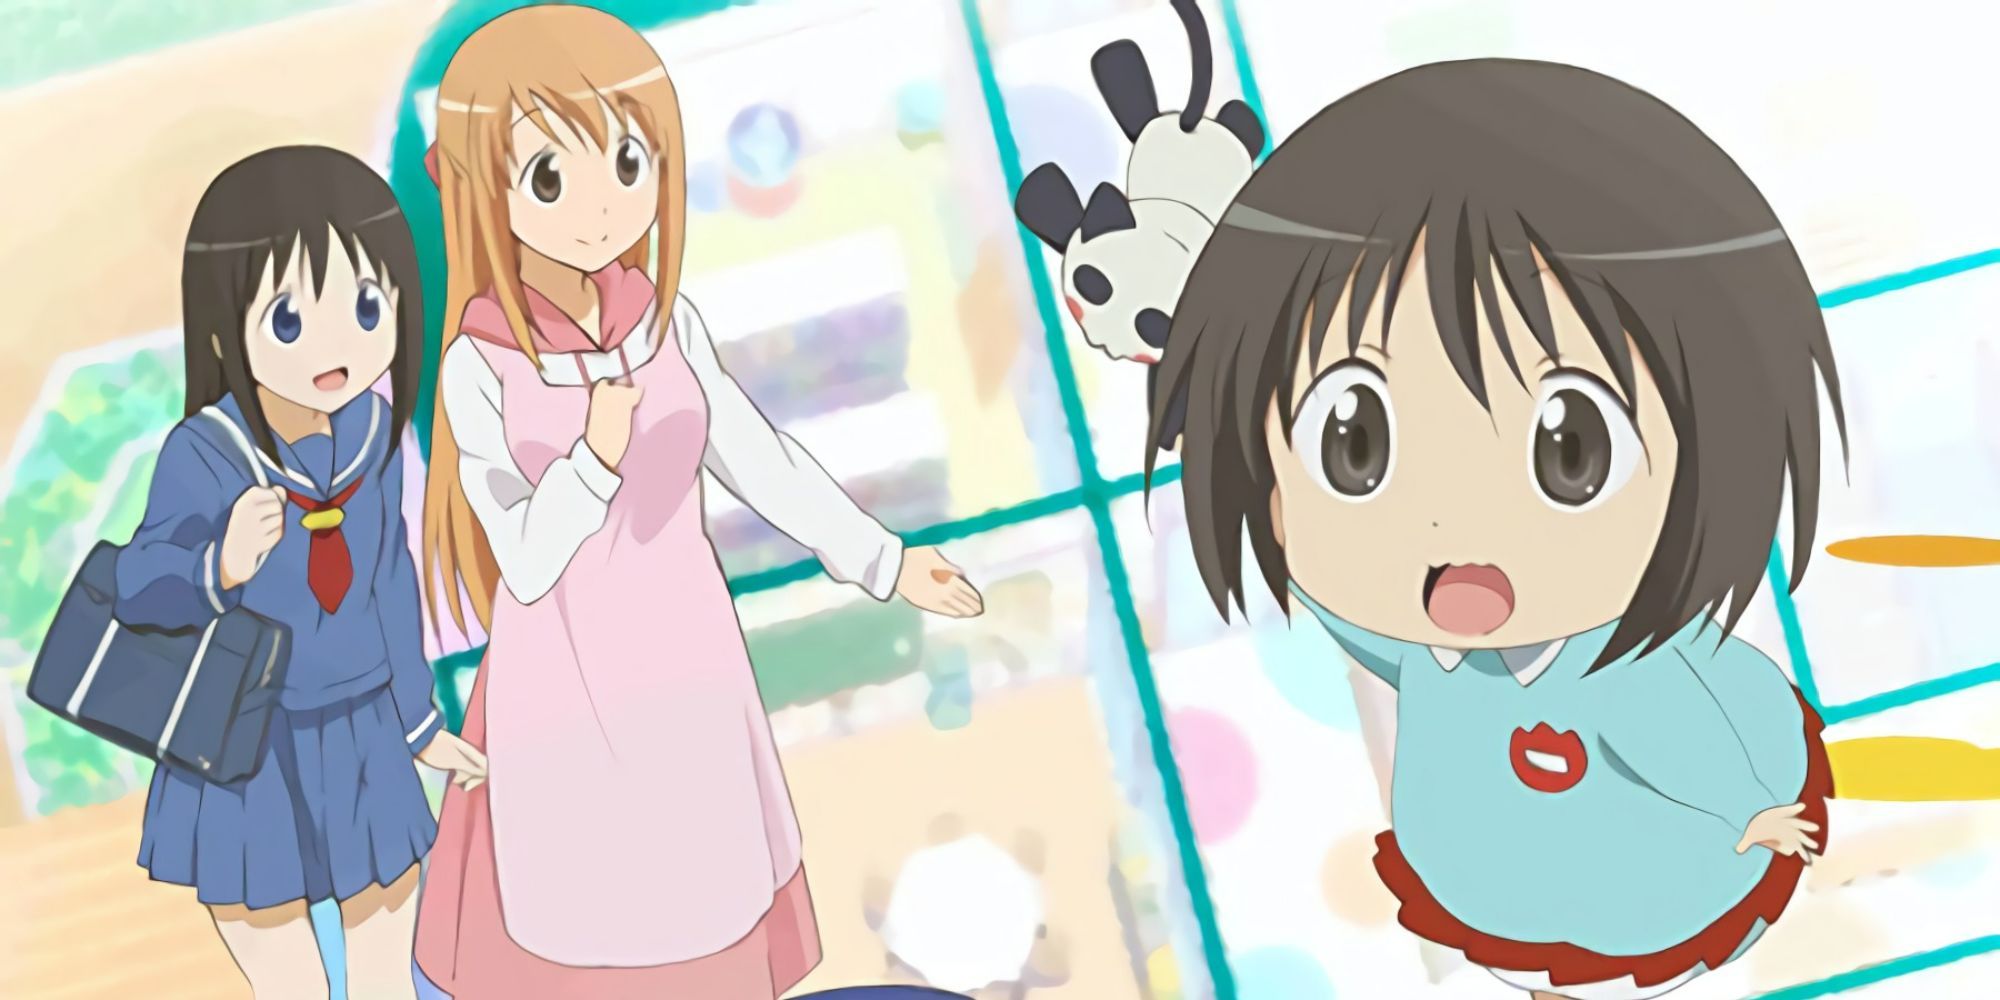 Two regular characters and a chibi character from Hanamaru Kindergarten